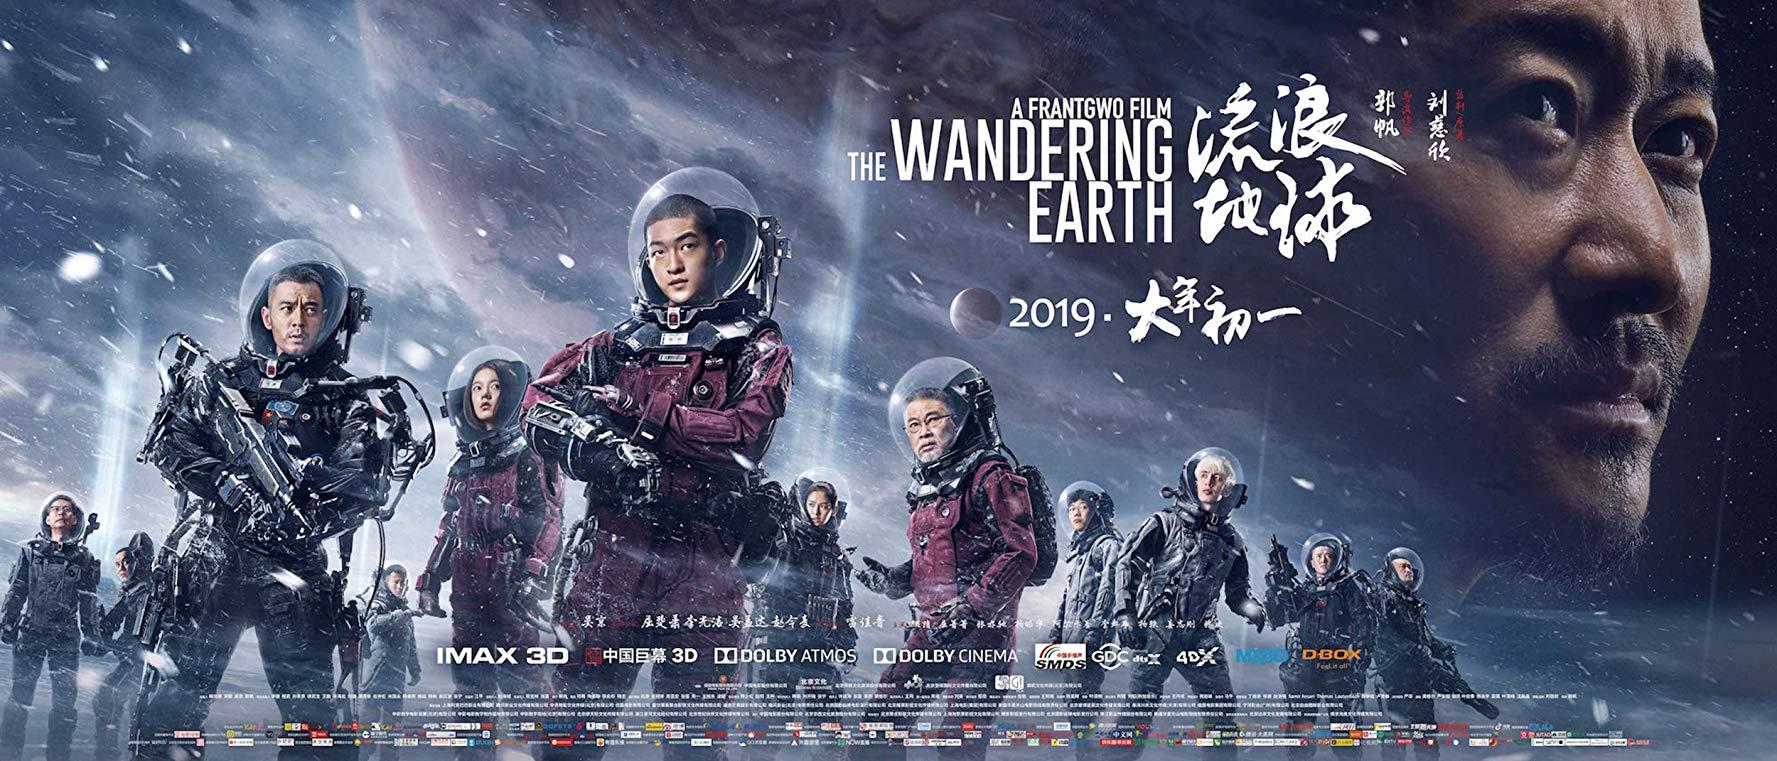 مشاهدة فيلم The Wandering Earth (2019) مترجم HD اون لاين